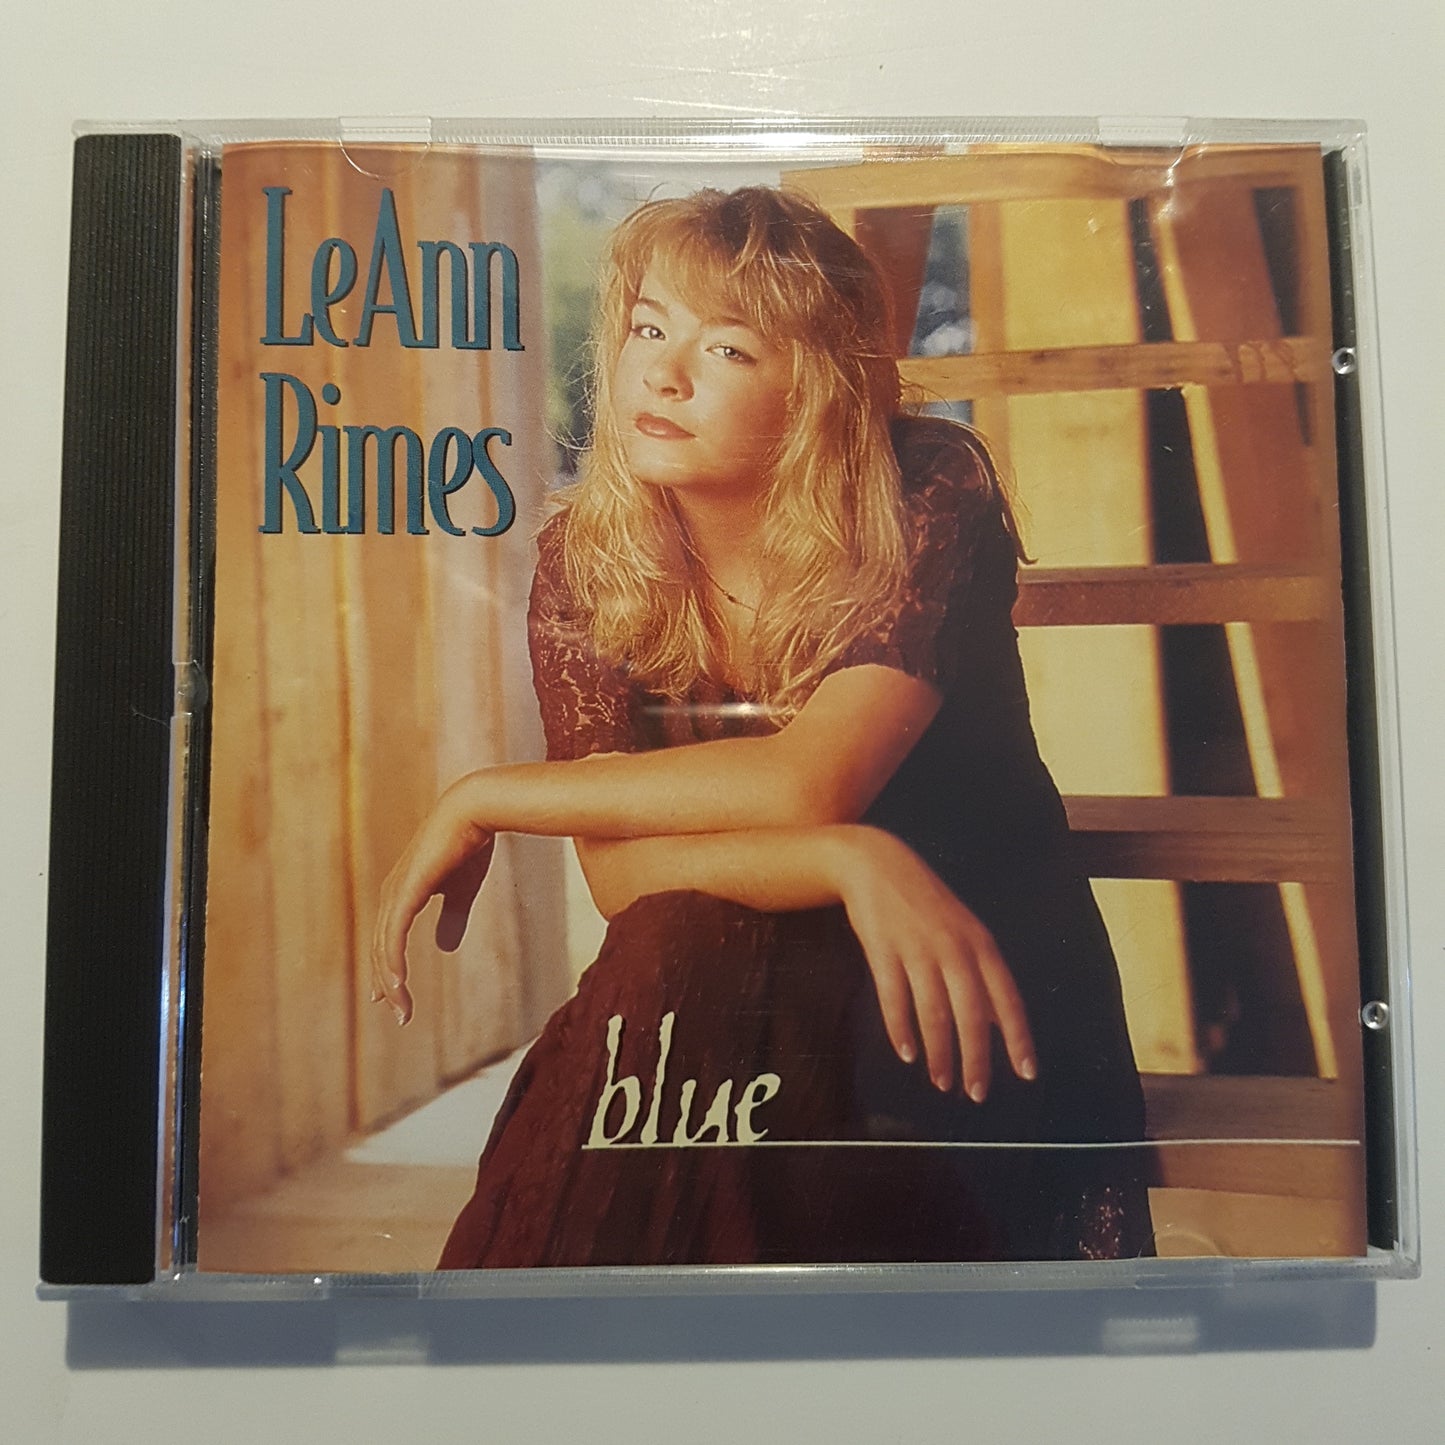 LeAnn Rimes, Blue (1CD)